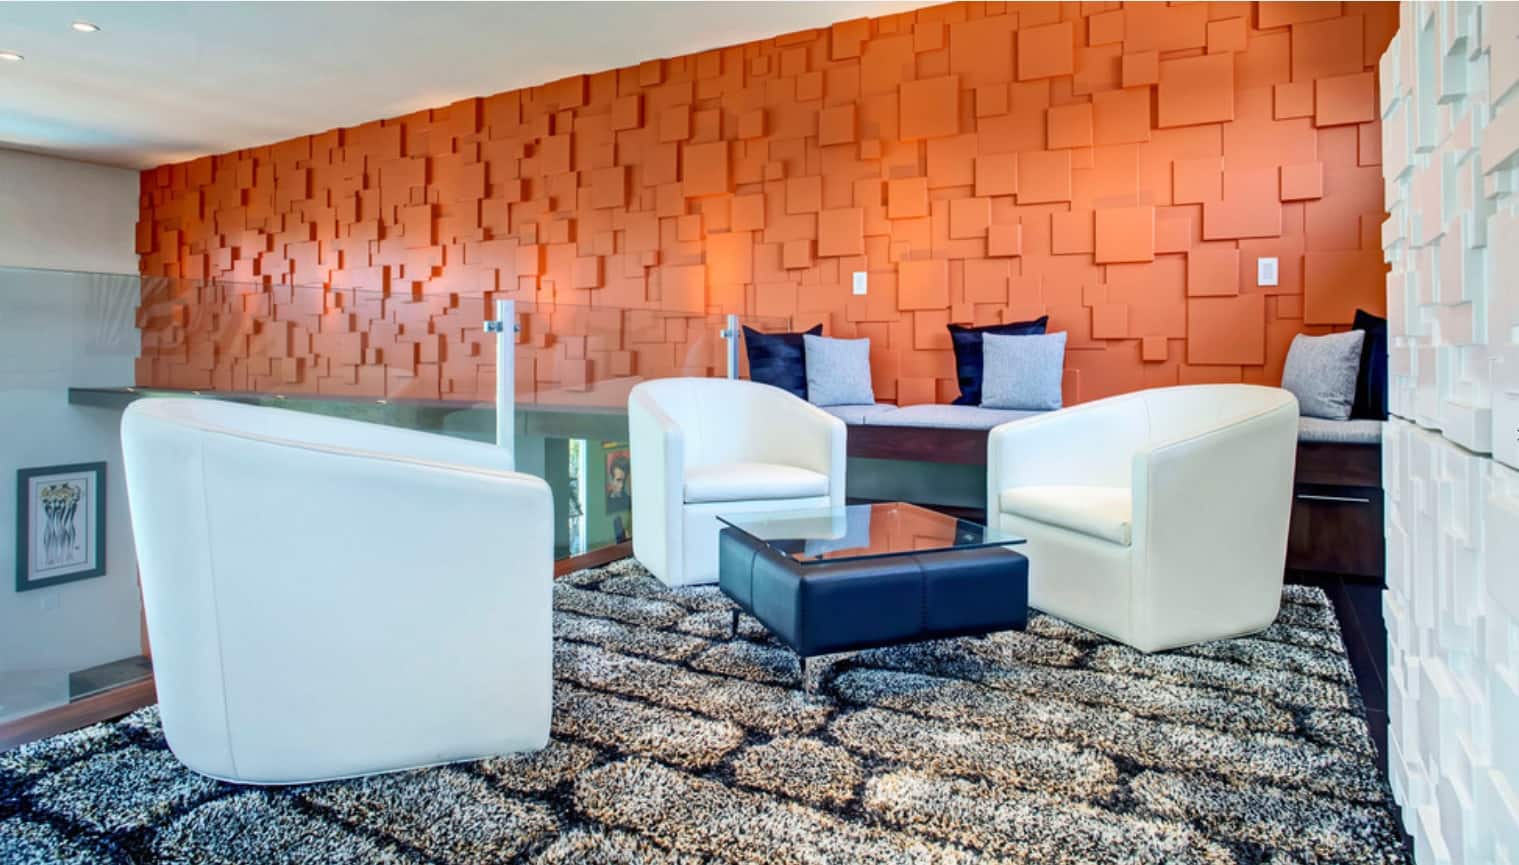 Striking orange textured walls for spacious chatting area